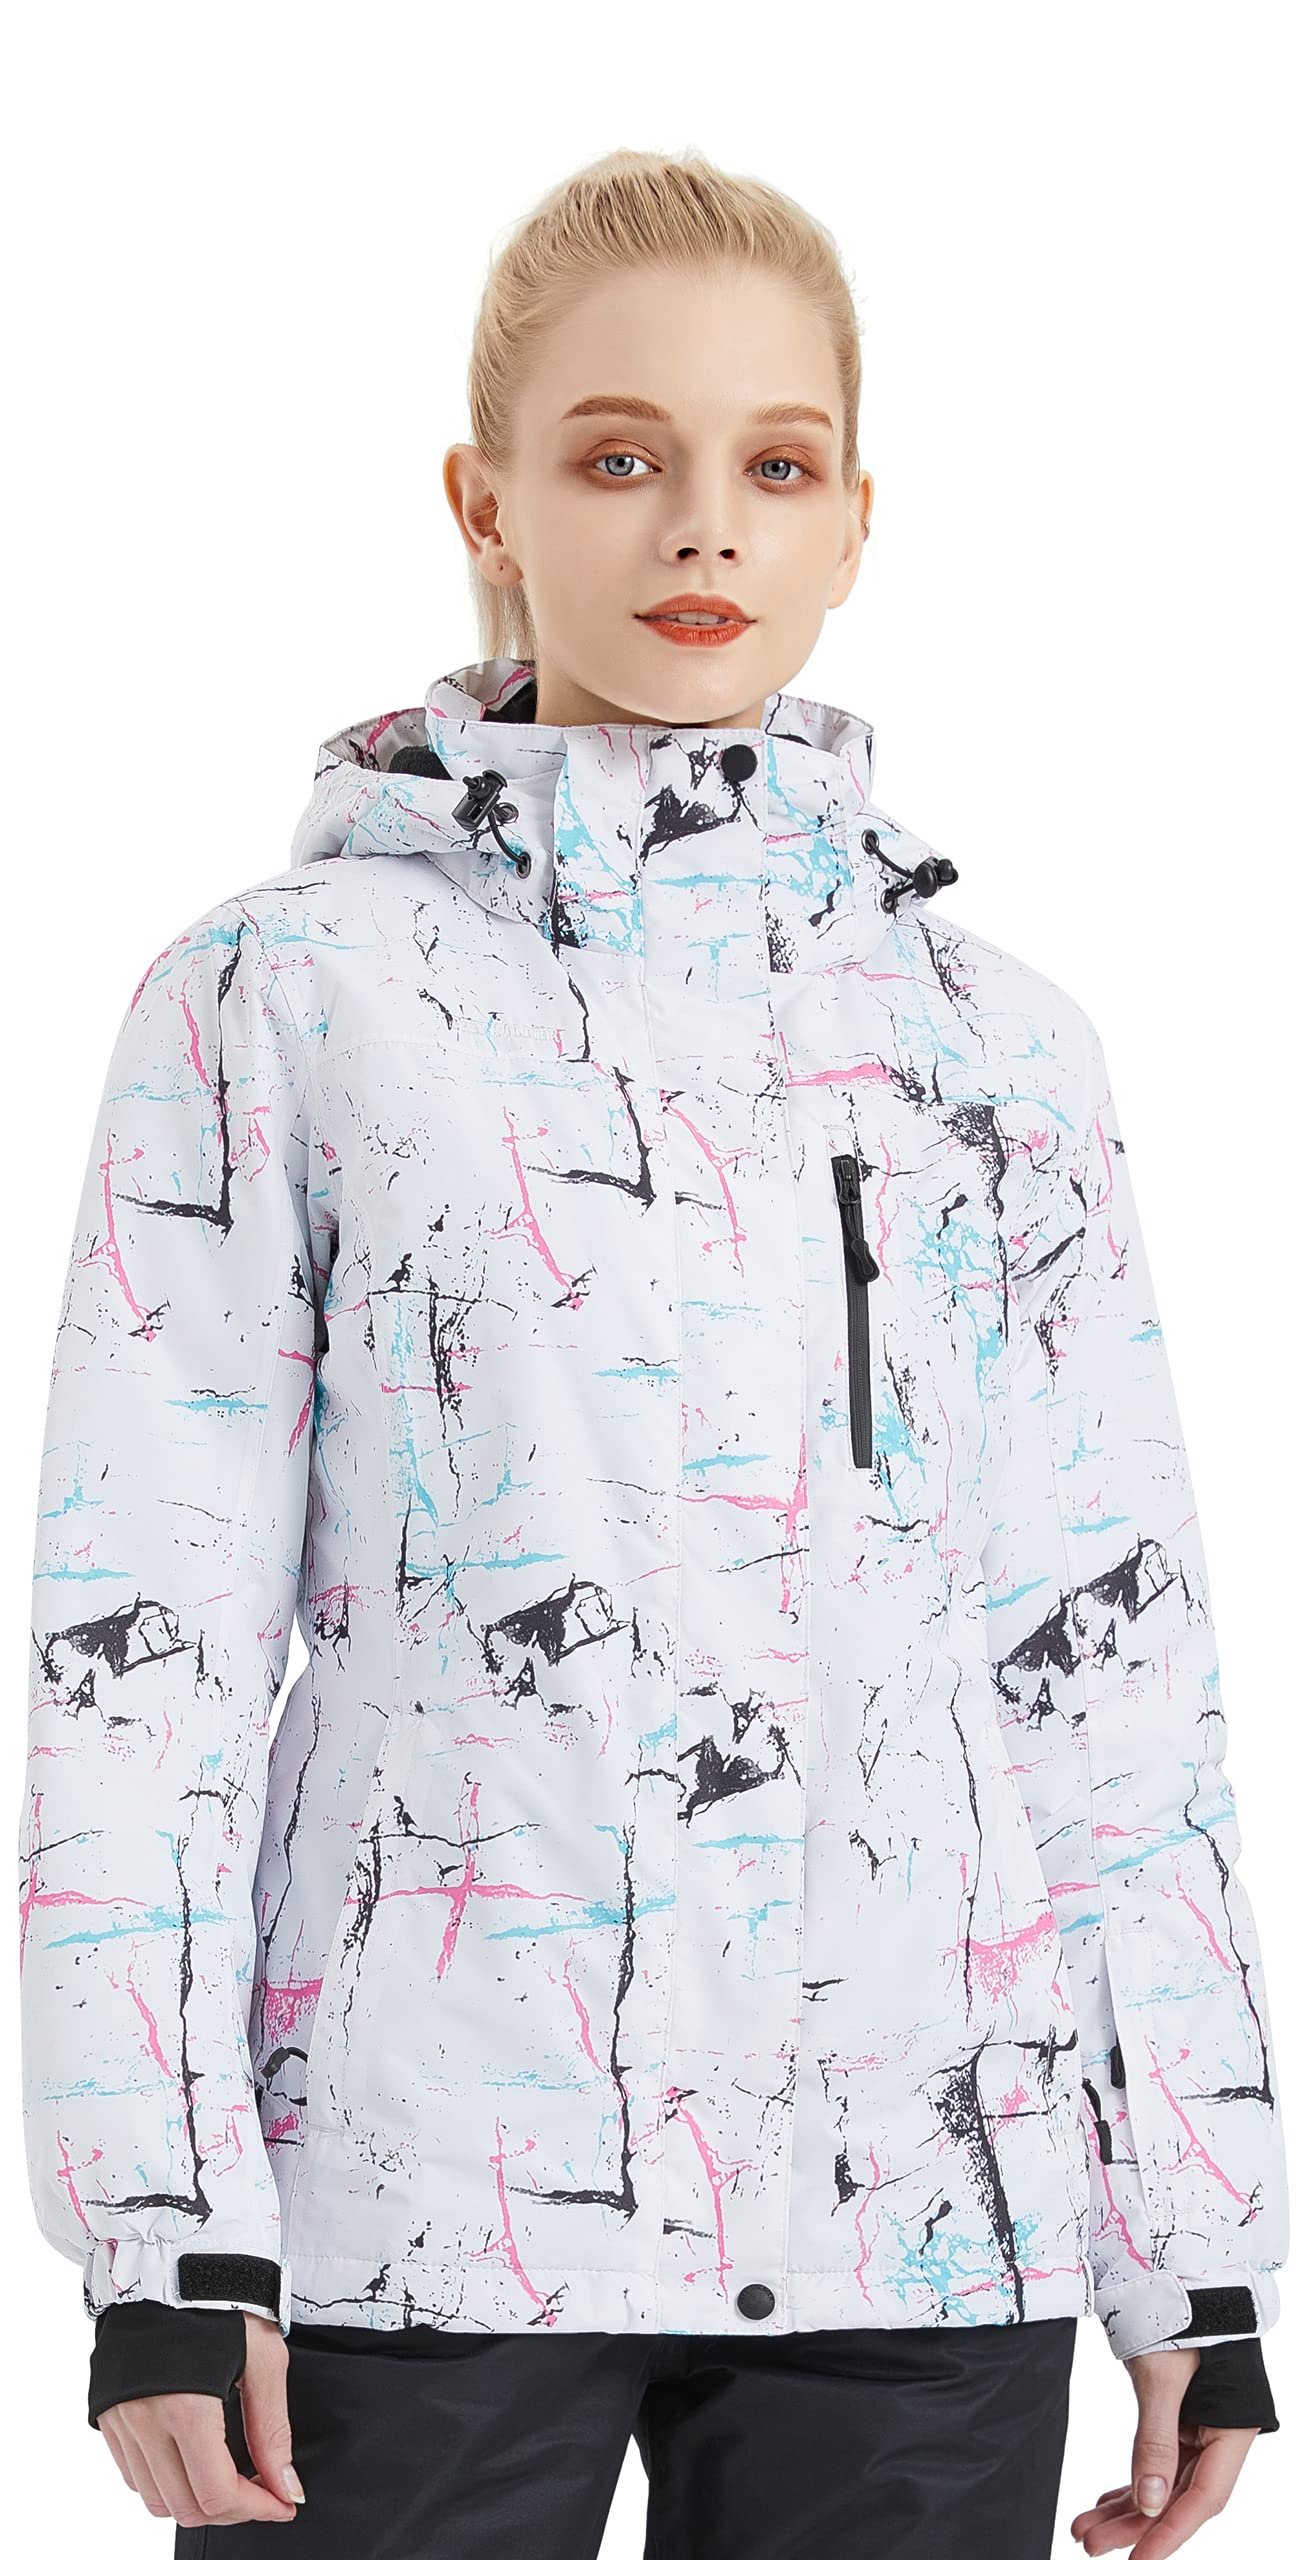 FREE SOLDIER Womens Waterproof Ski Snow Jacket Fleece Lined Warm Winter Rain Jacket with Hood Fully Taped Seams(Floral Print,S)